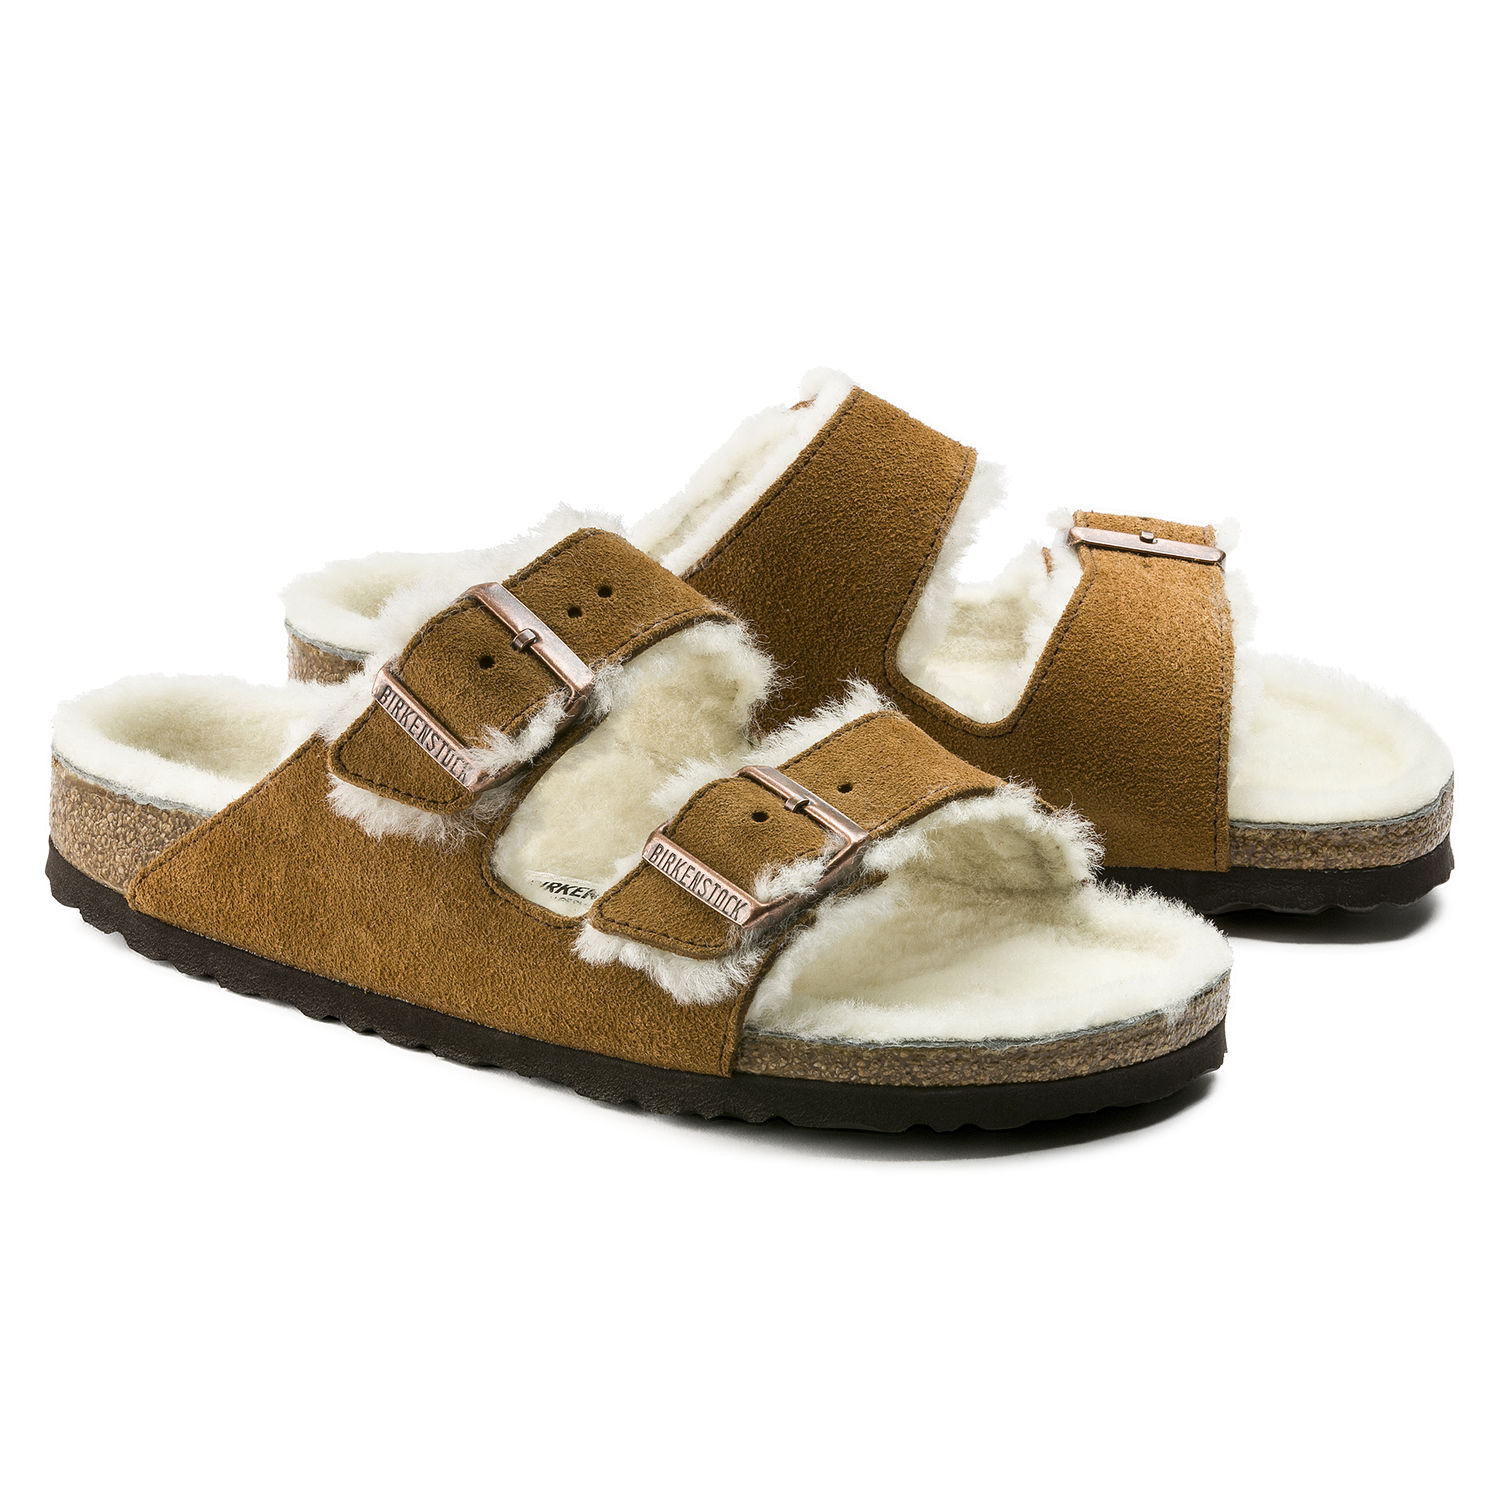 birkenstock arizona slippers